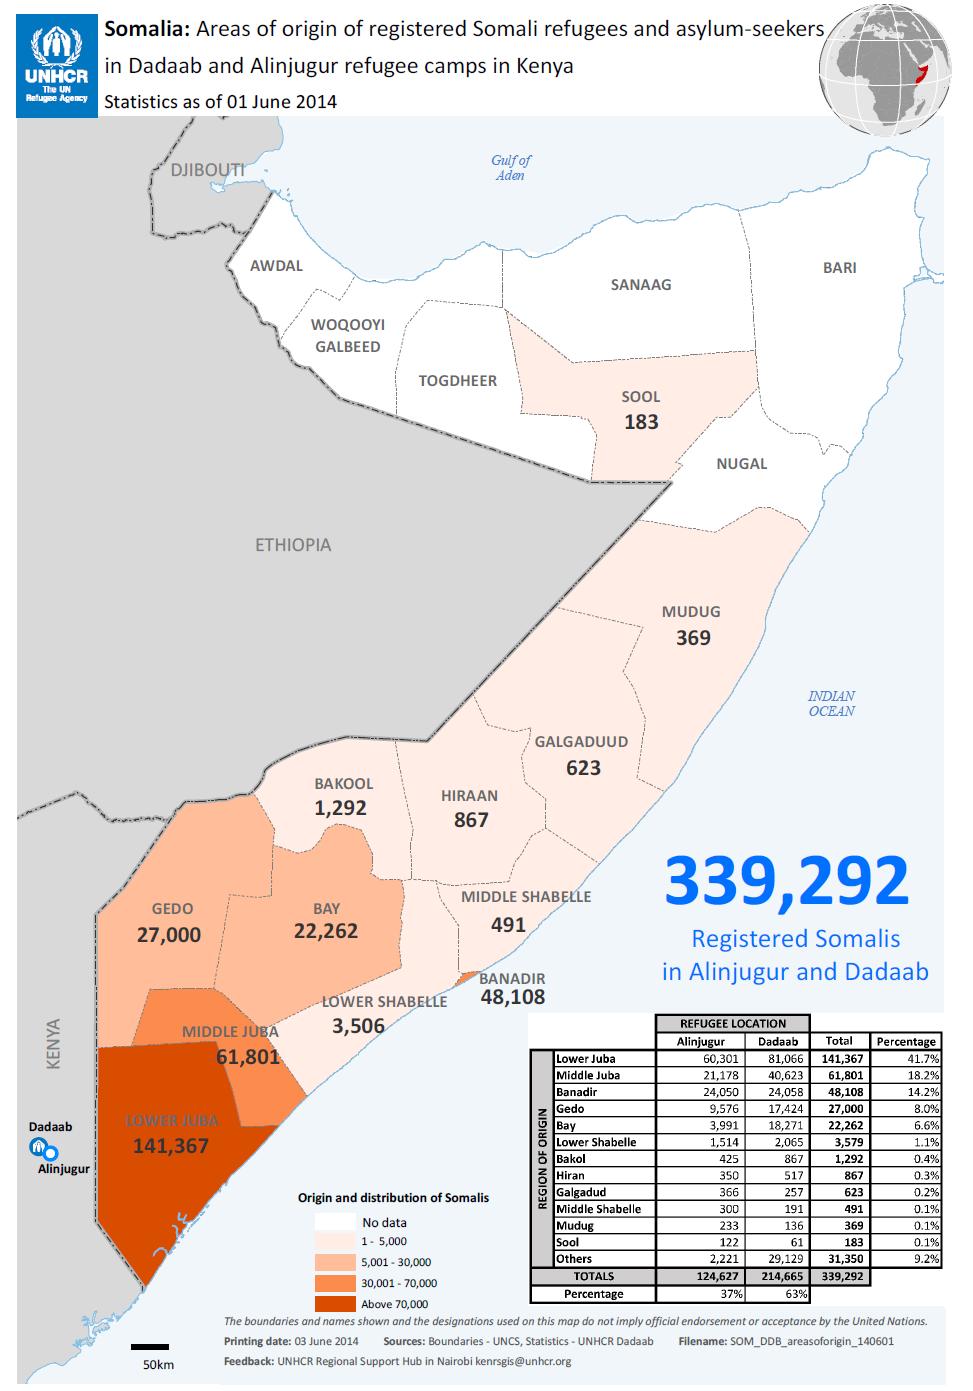 org Web portal on Somali Displacement: http://data.unhcr.